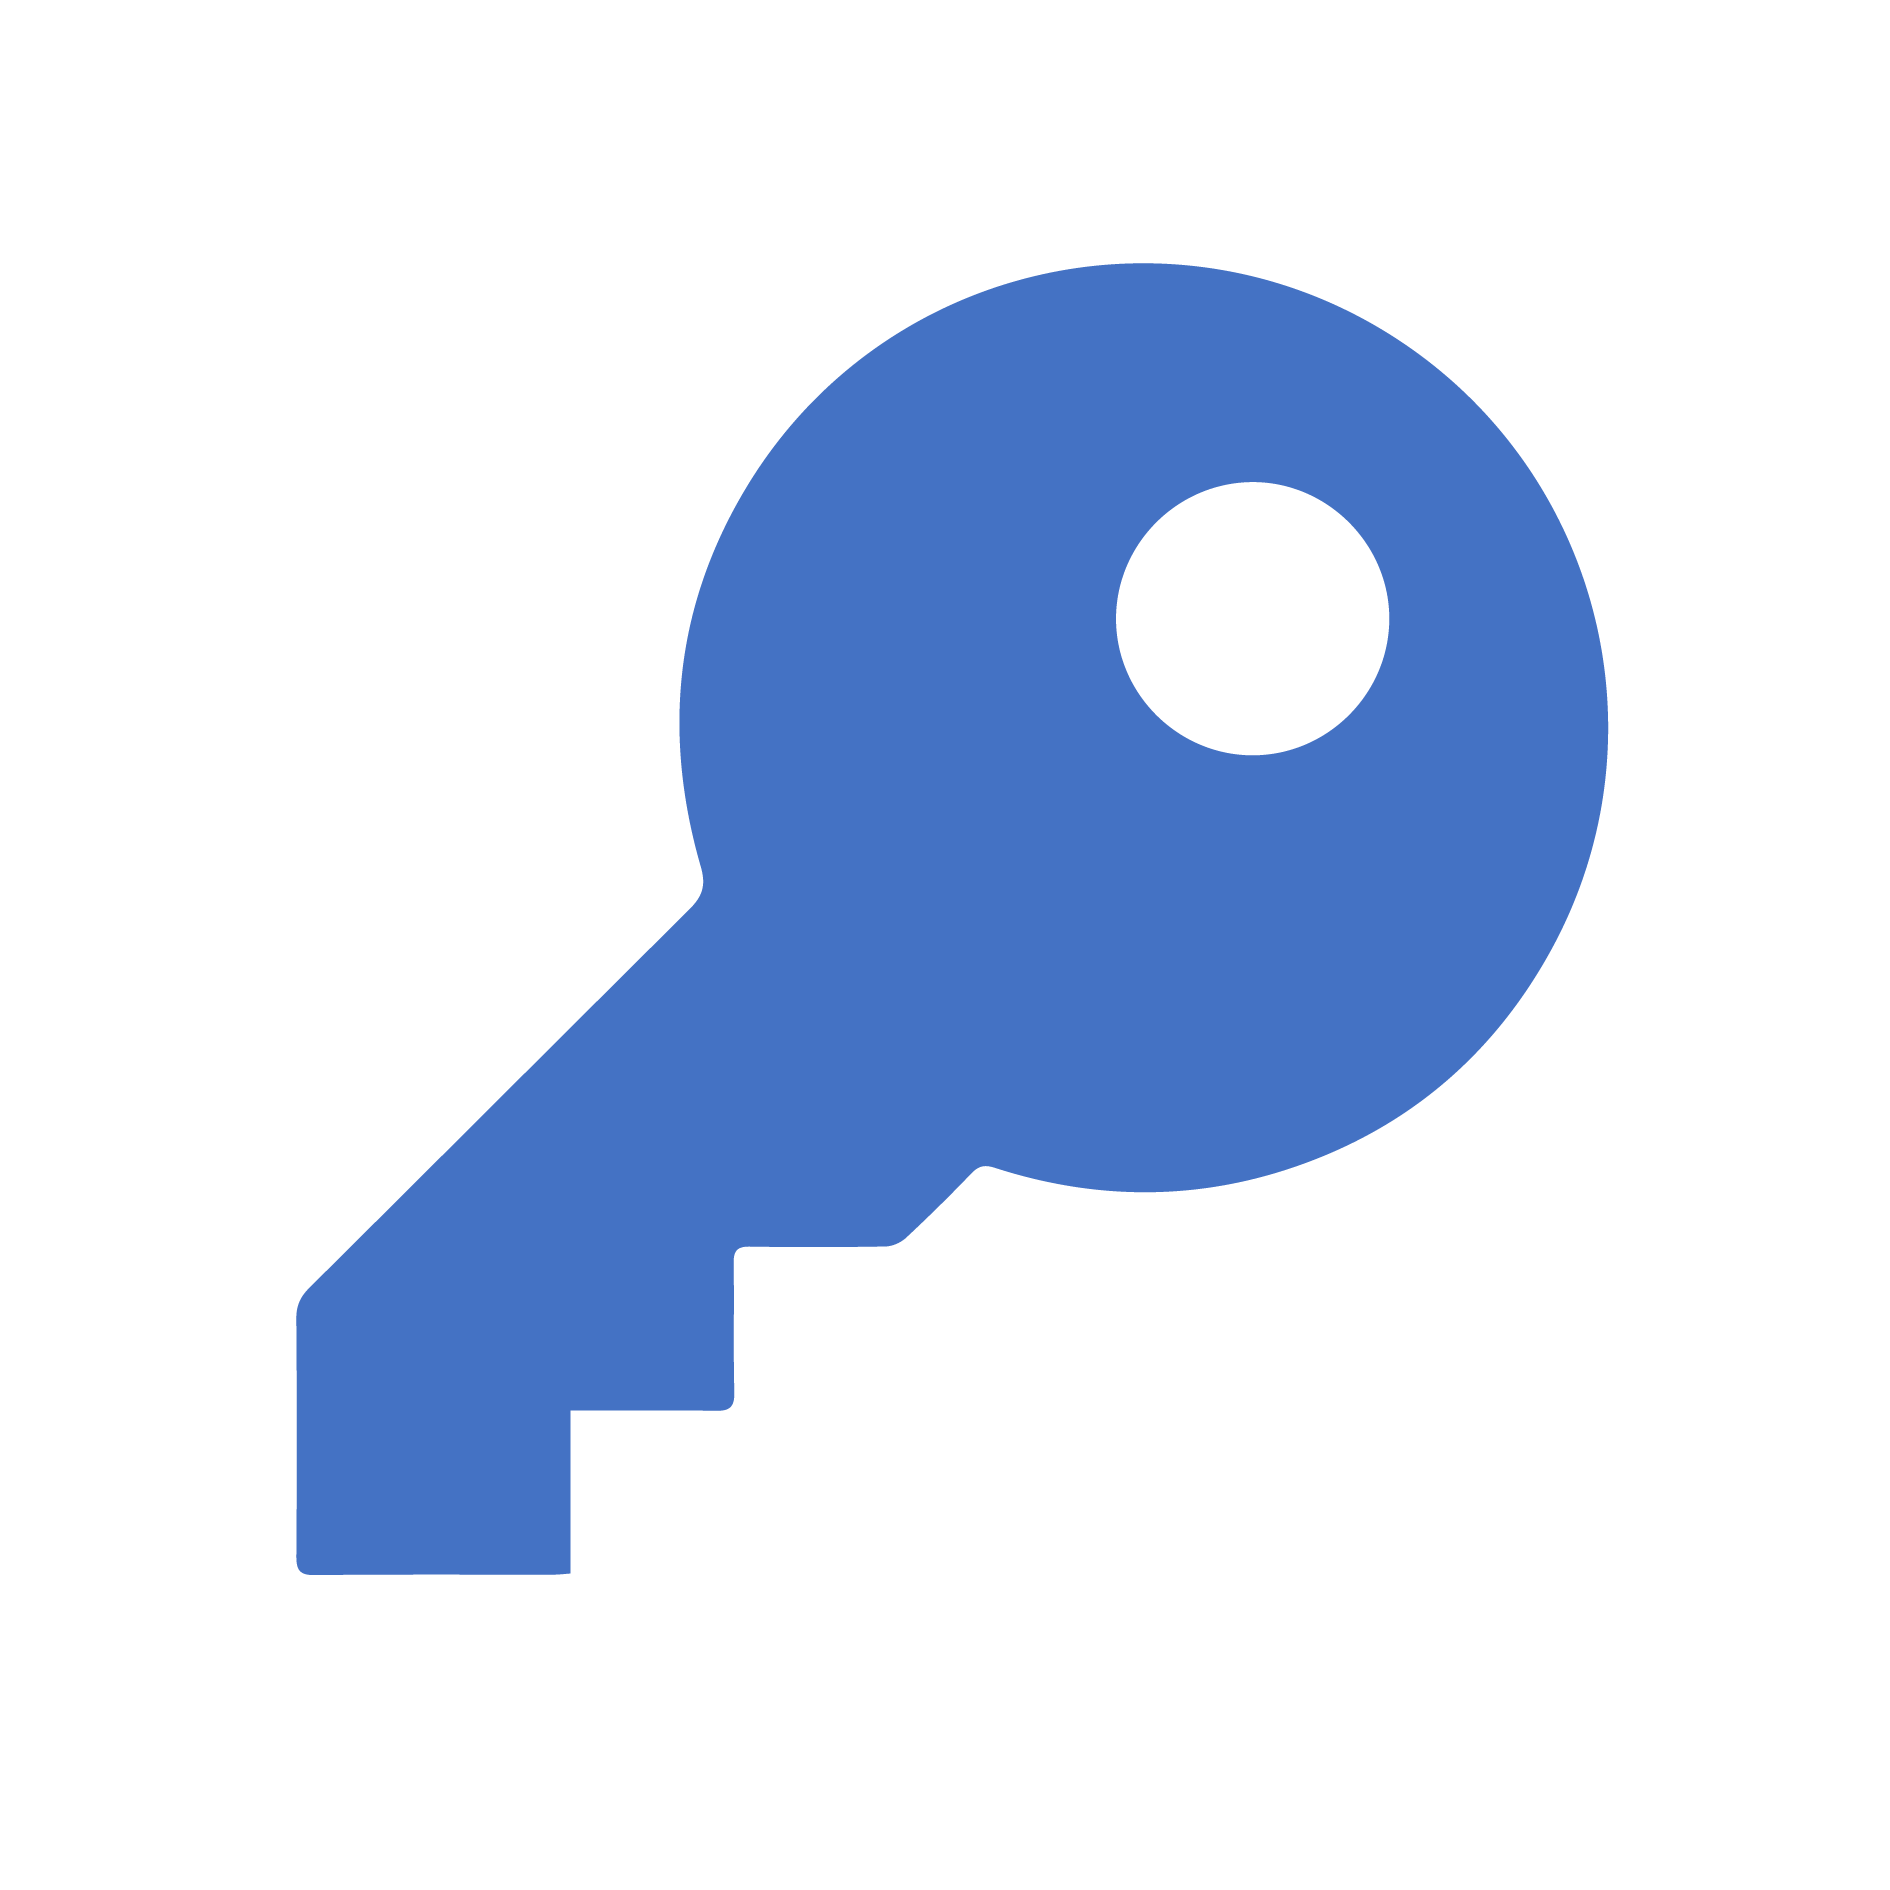 Blue key. Синий ключик. Под ключ иконка. Key icon. Ключ голубой картинка.